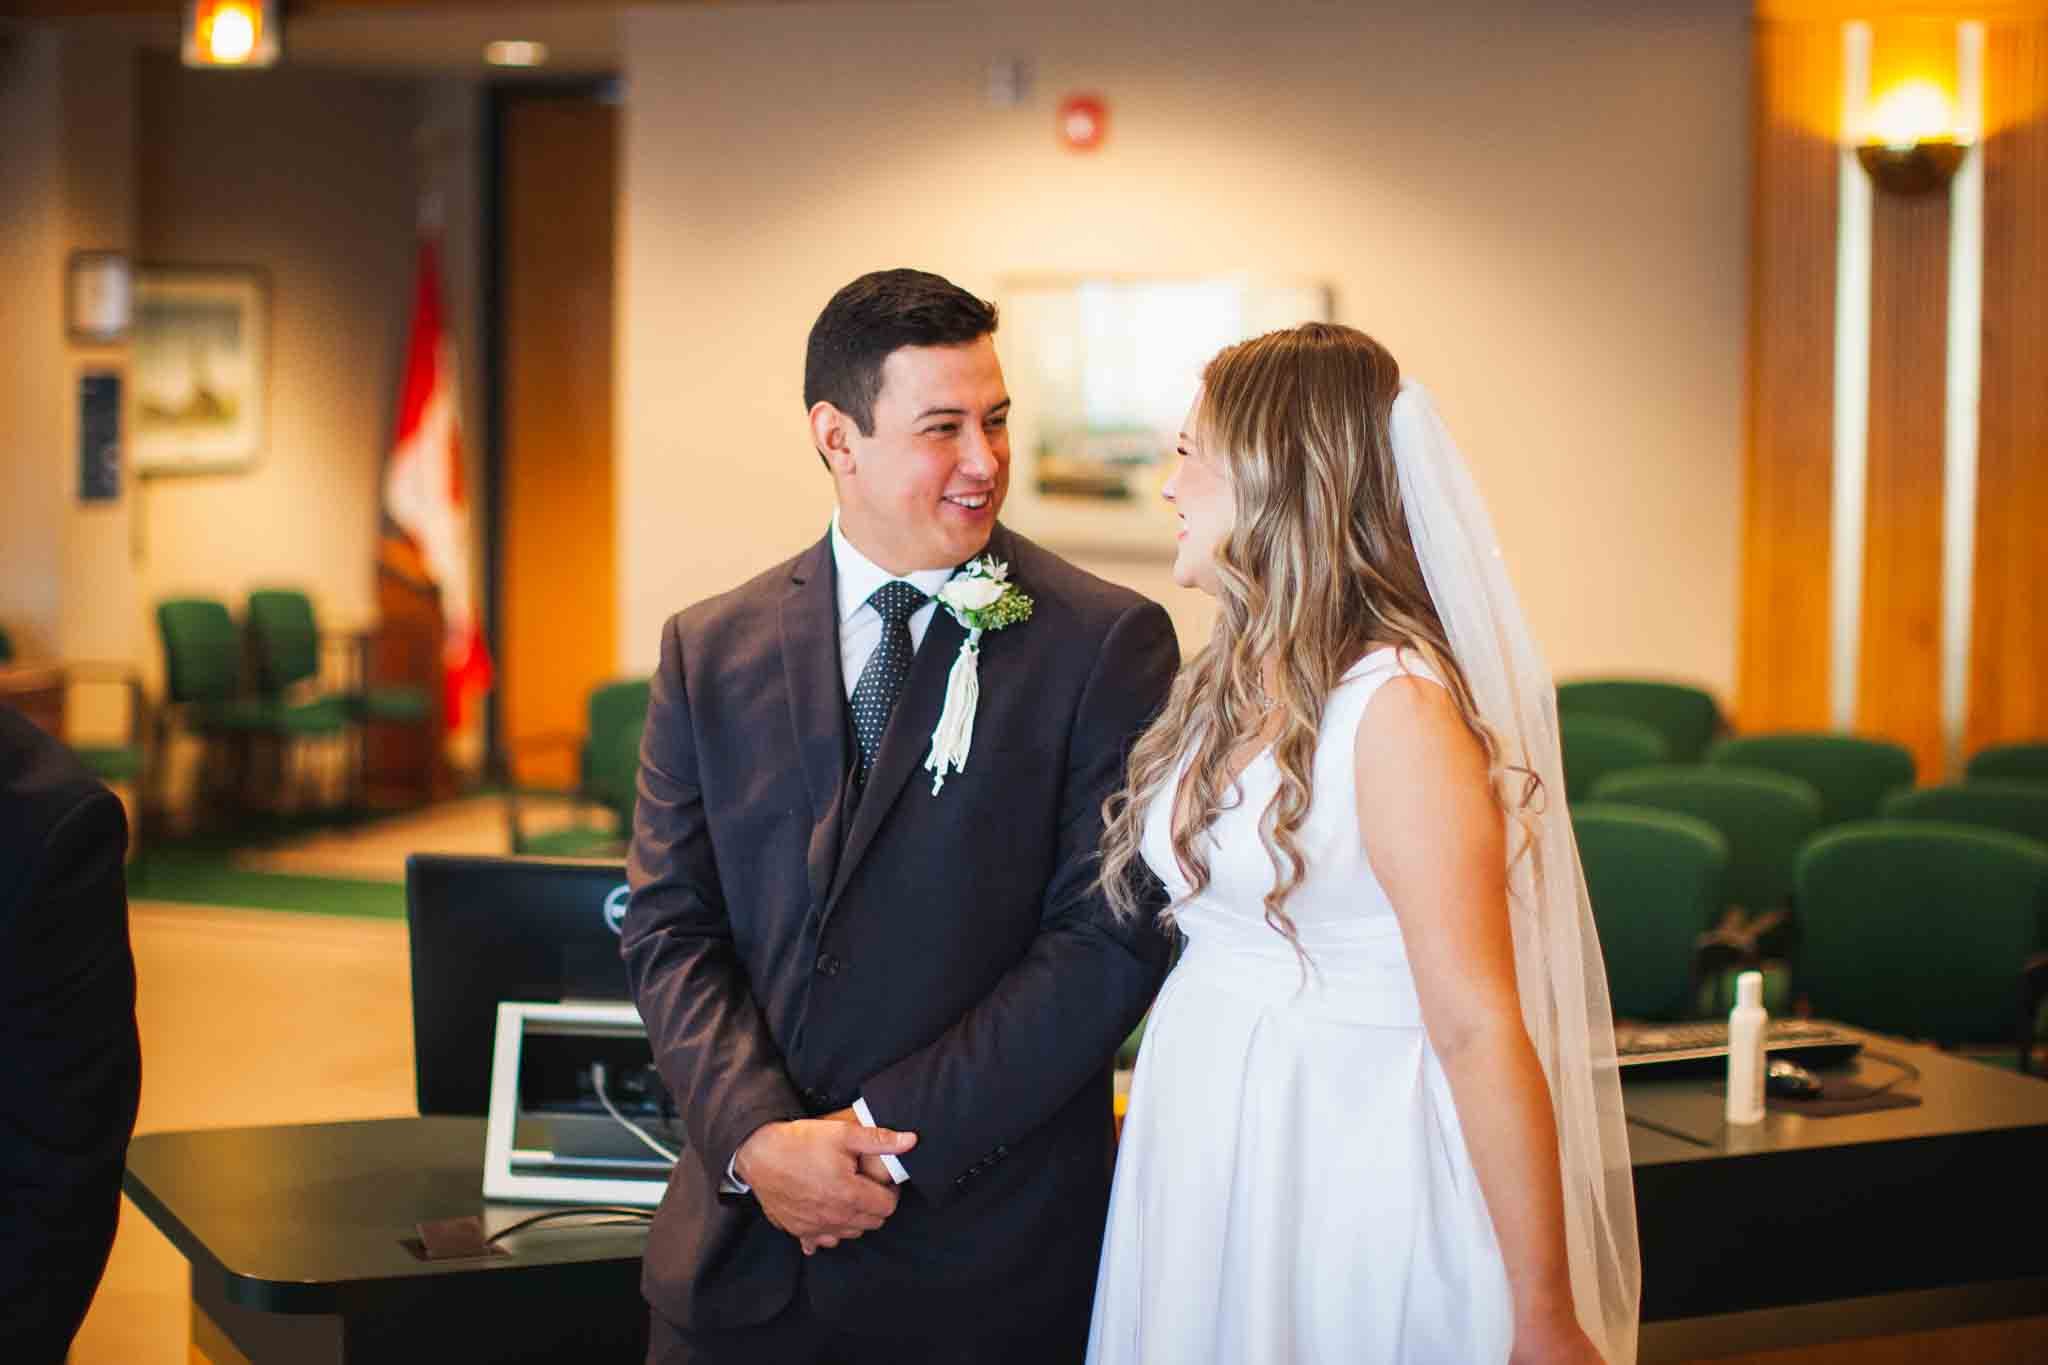 City Hall Wedding Photography Waterloo Ontario-02.jpg